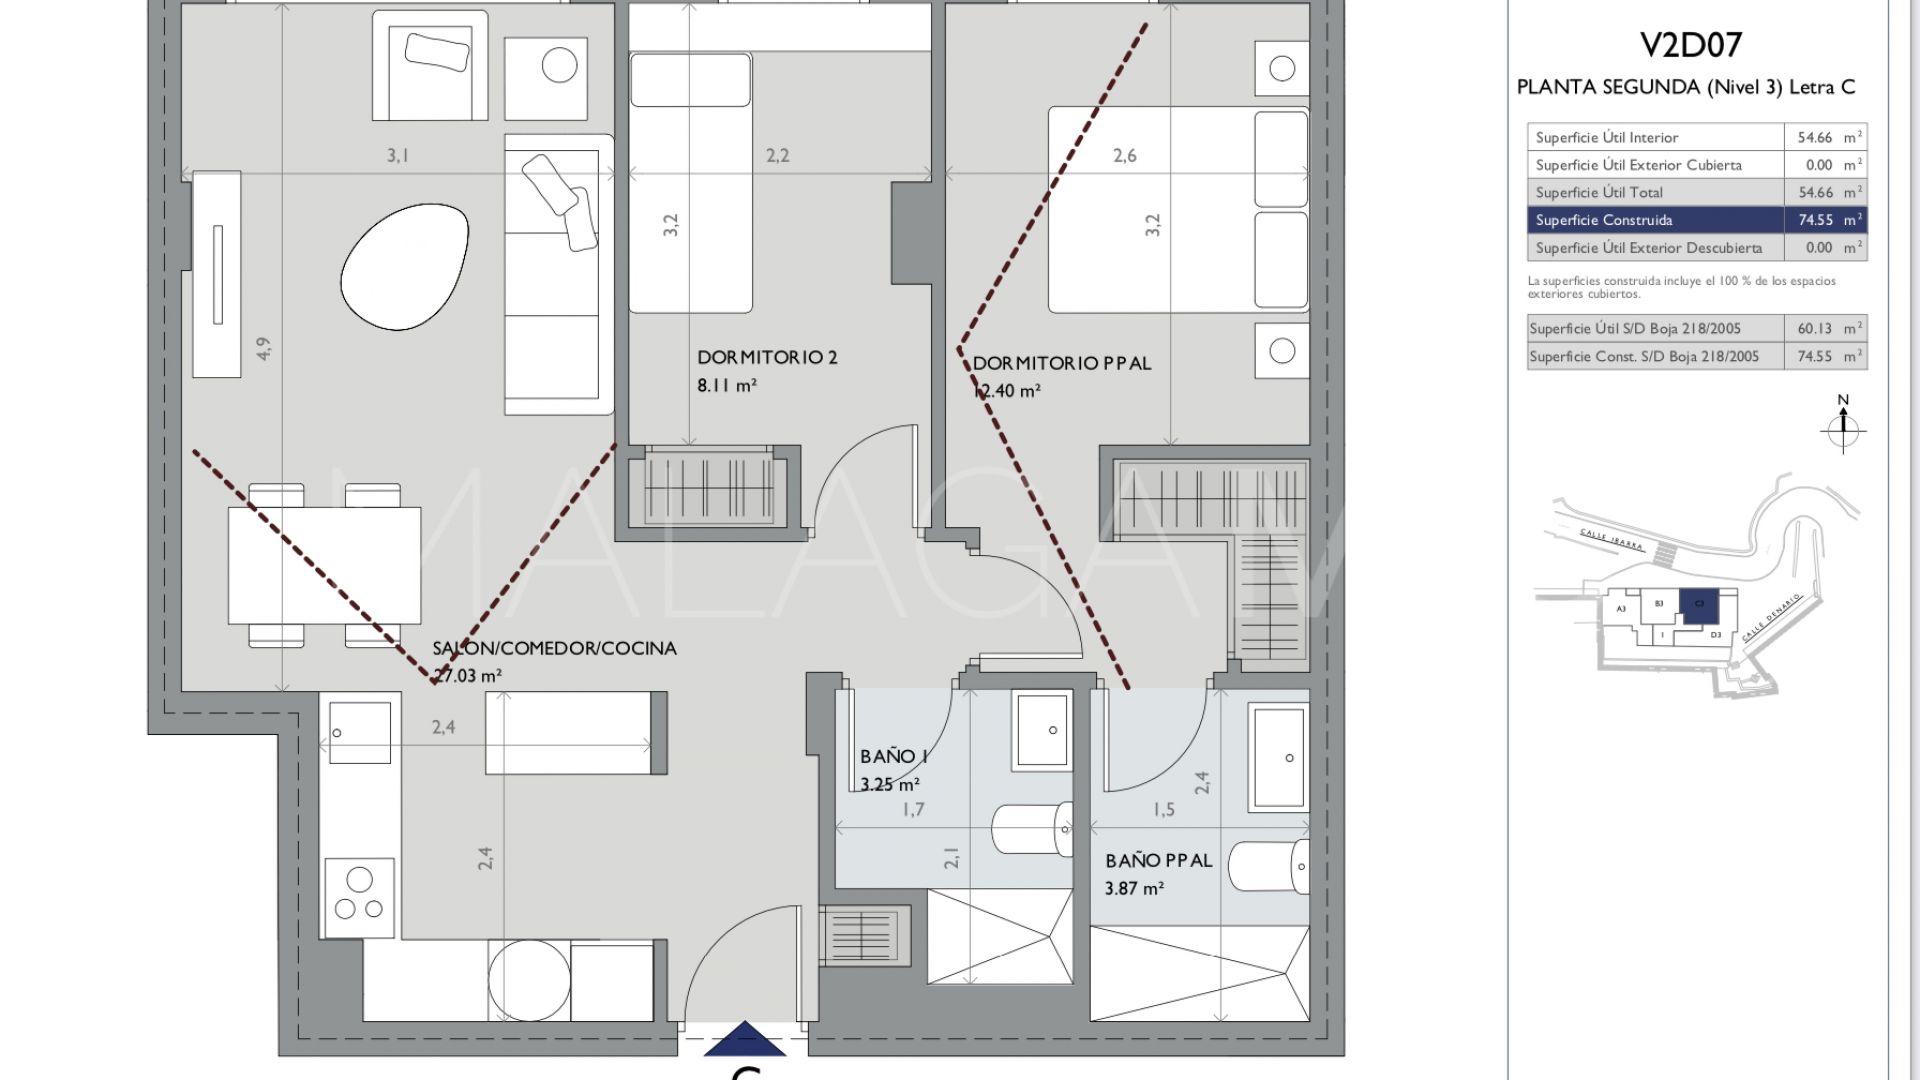 2 bedrooms apartment in El Limonar for sale